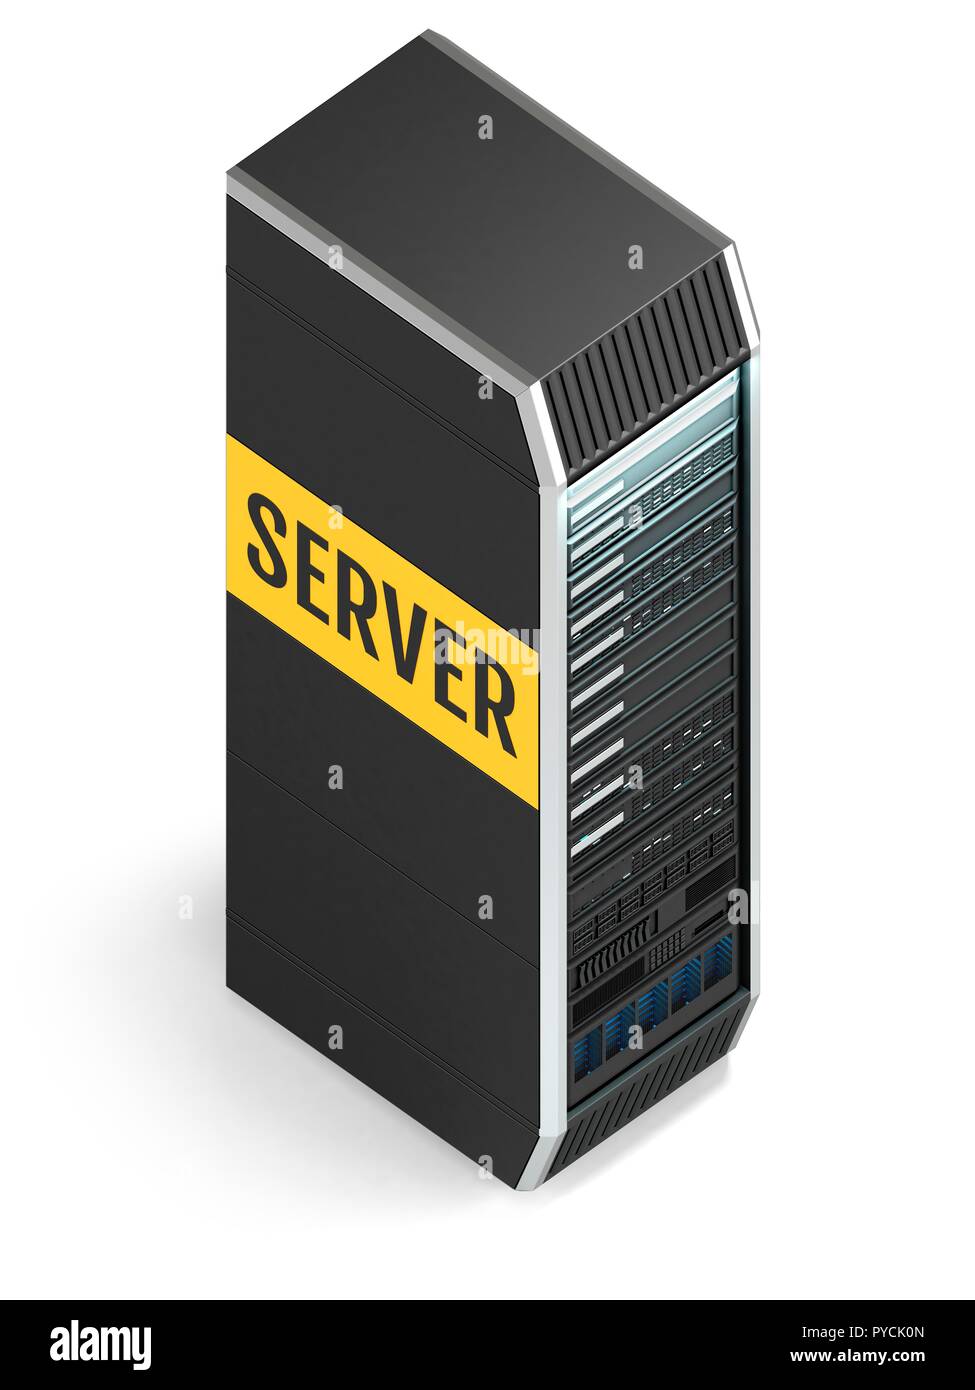 Server, illustration. Stock Photo